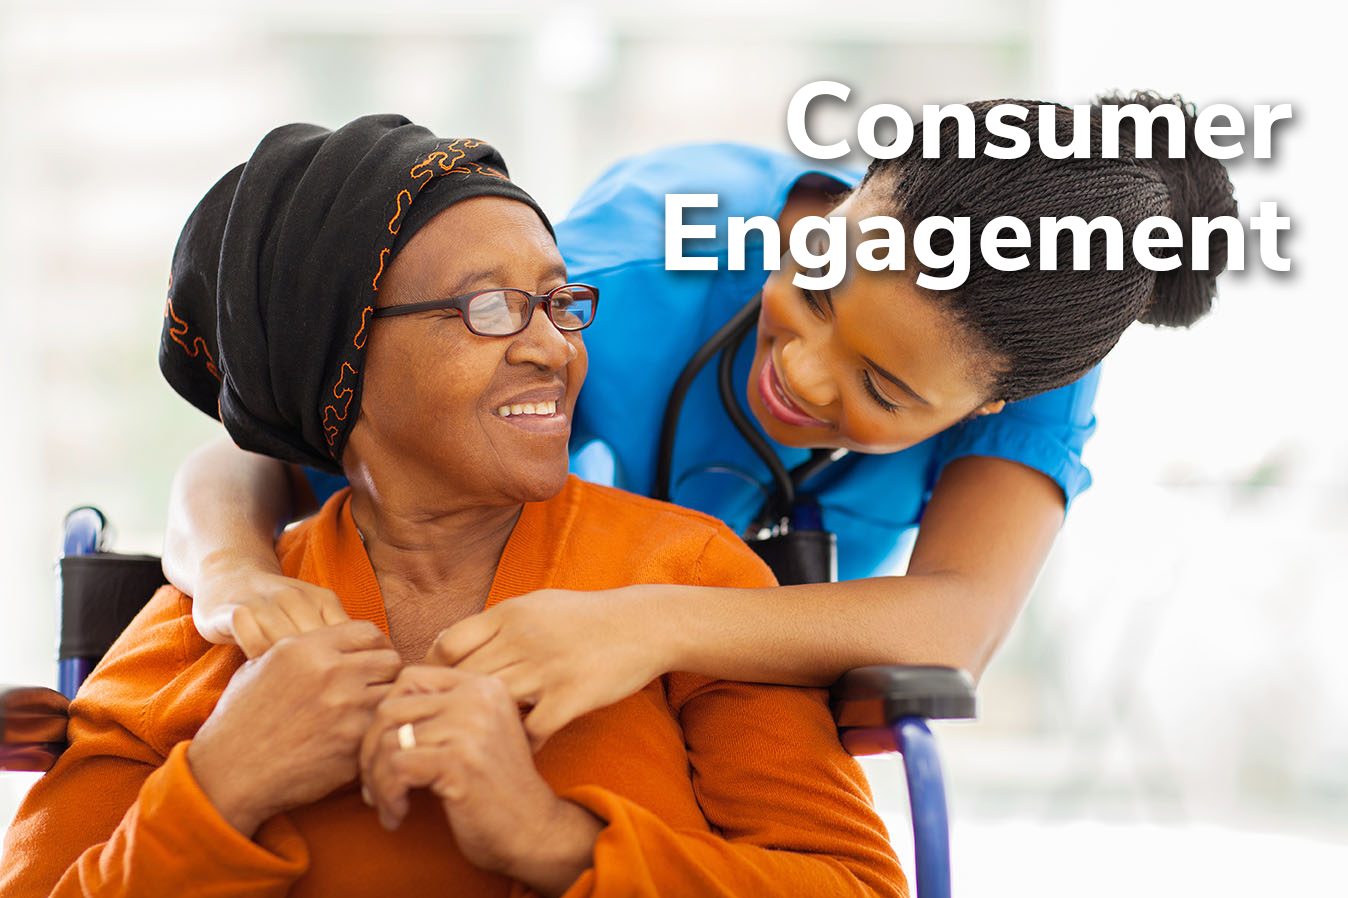 Consumer Engagement Title Frame